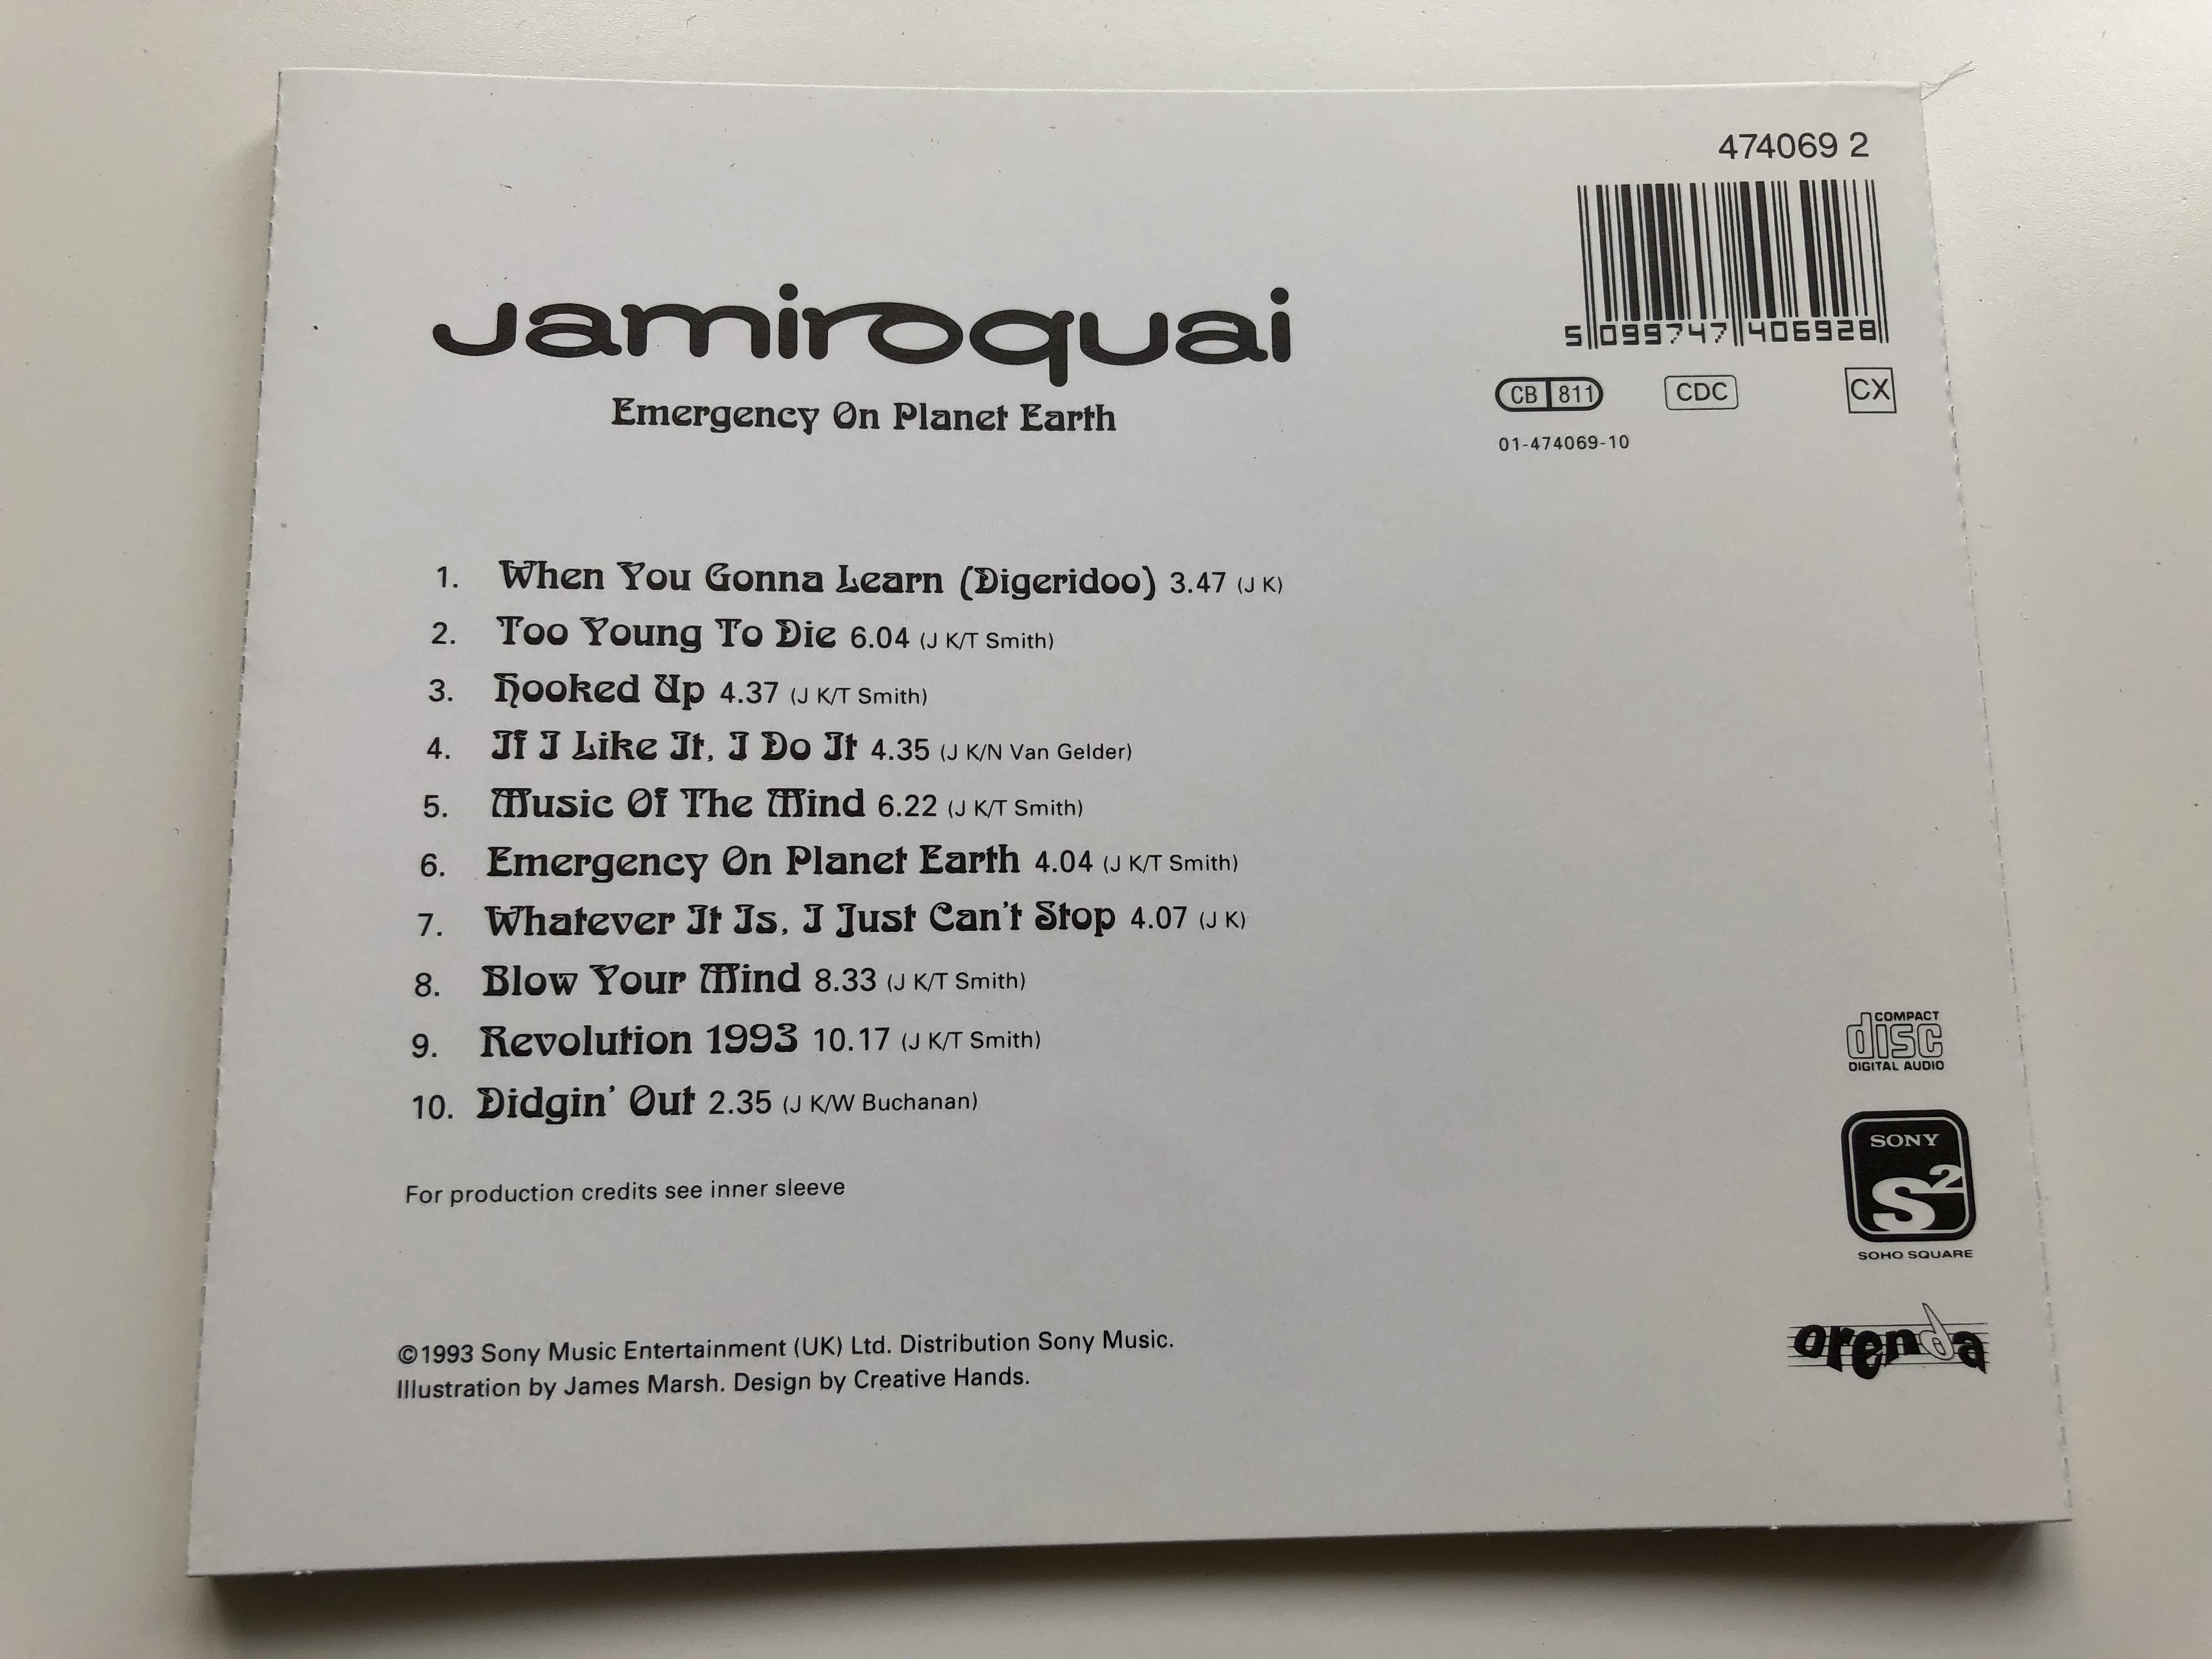 jamiroquai-emergency-on-planet-earth-sony-music-entertainment-audio-cd-1993-474069-2-5-.jpg